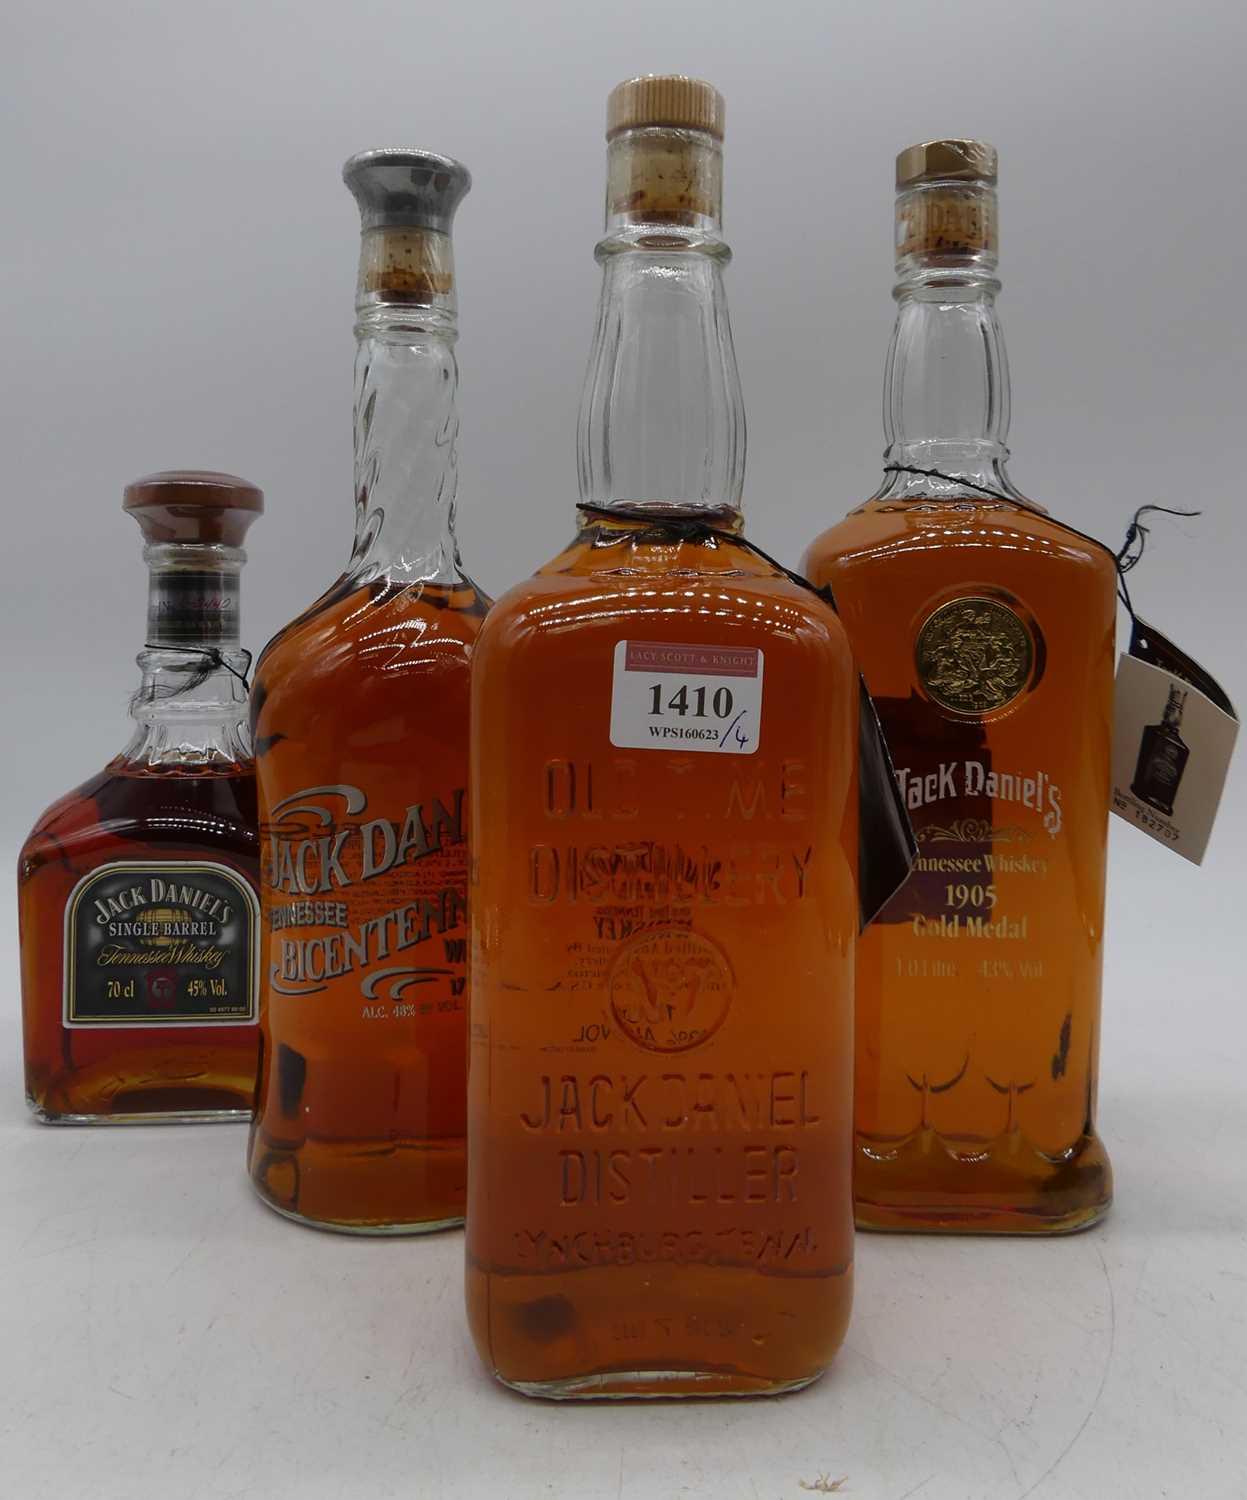 Jack Daniels 1905 Gold Medal Tennessee whisky, 100cl, 43%, one bottle; Jack Daniels bi-centennial